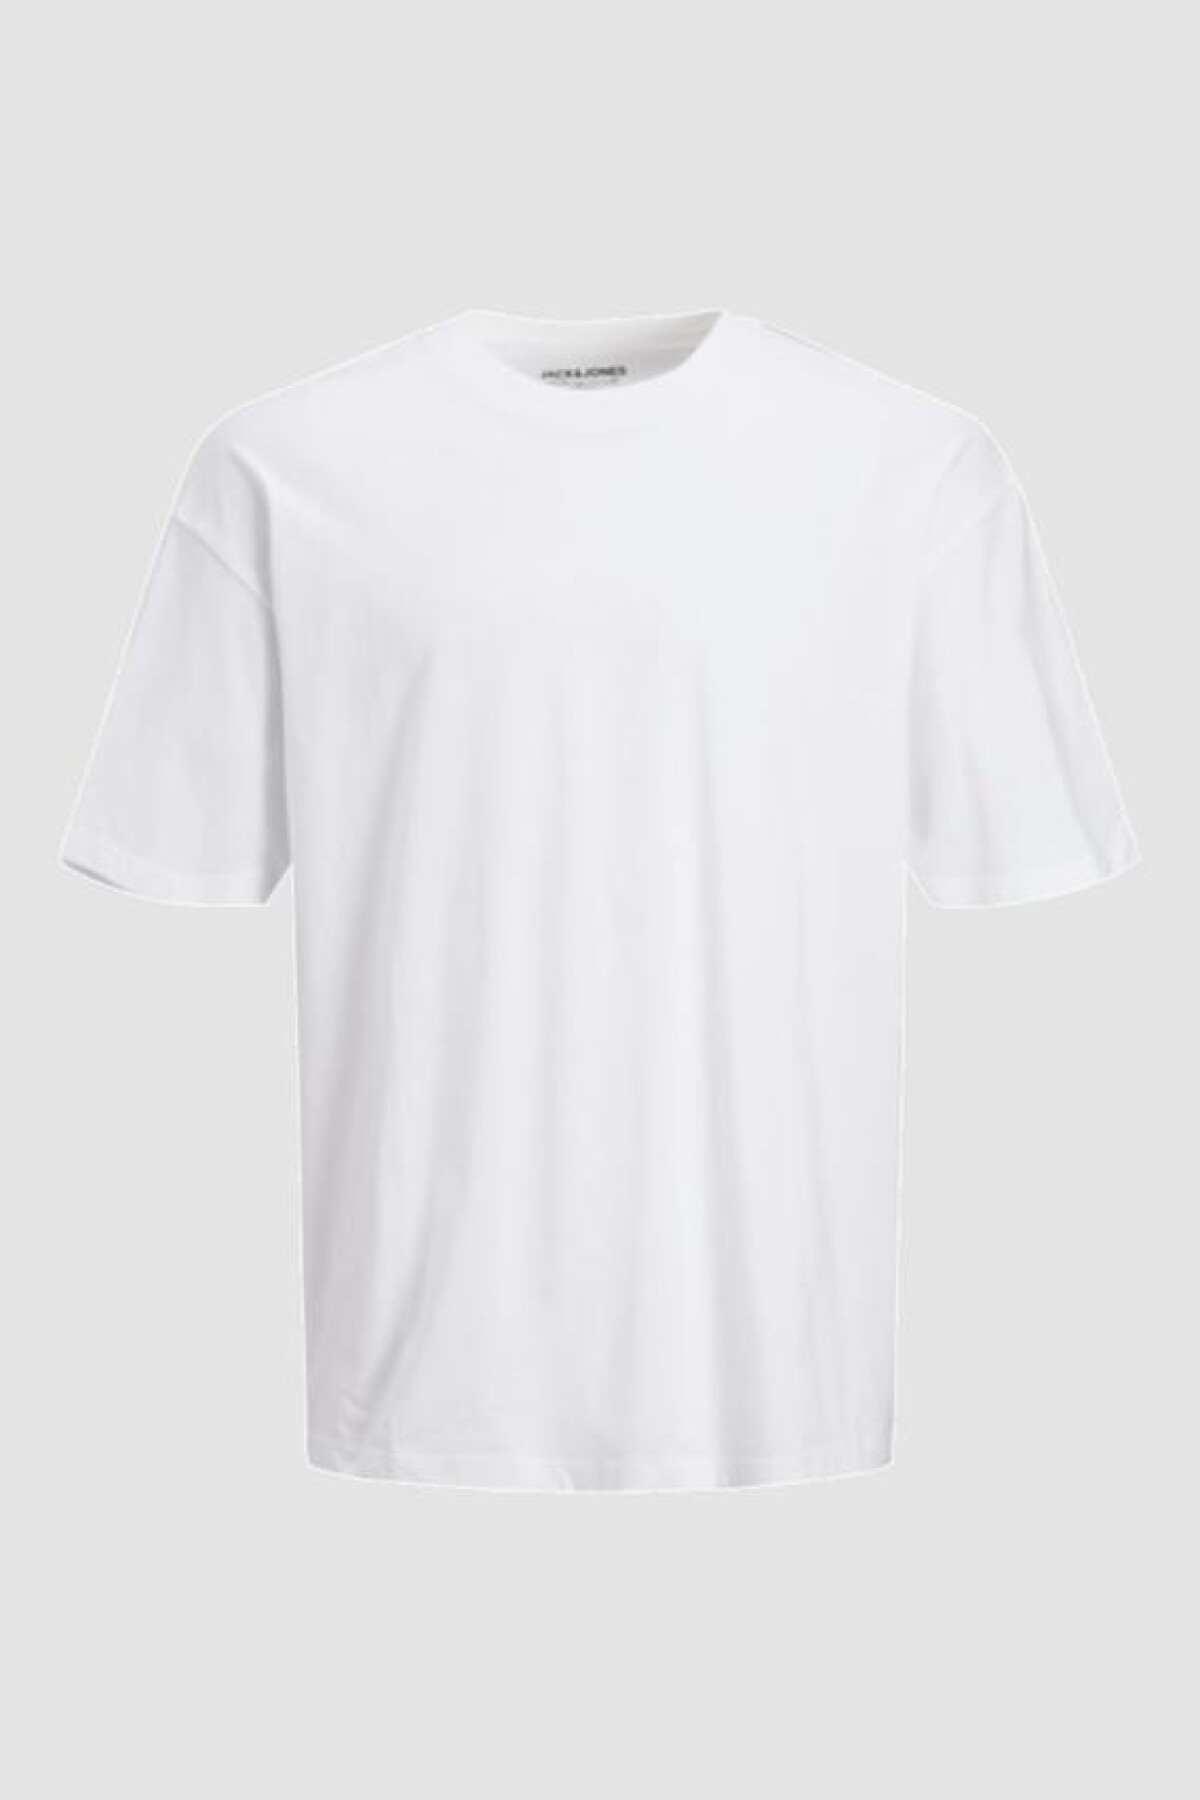 Camiseta Brink Básica White